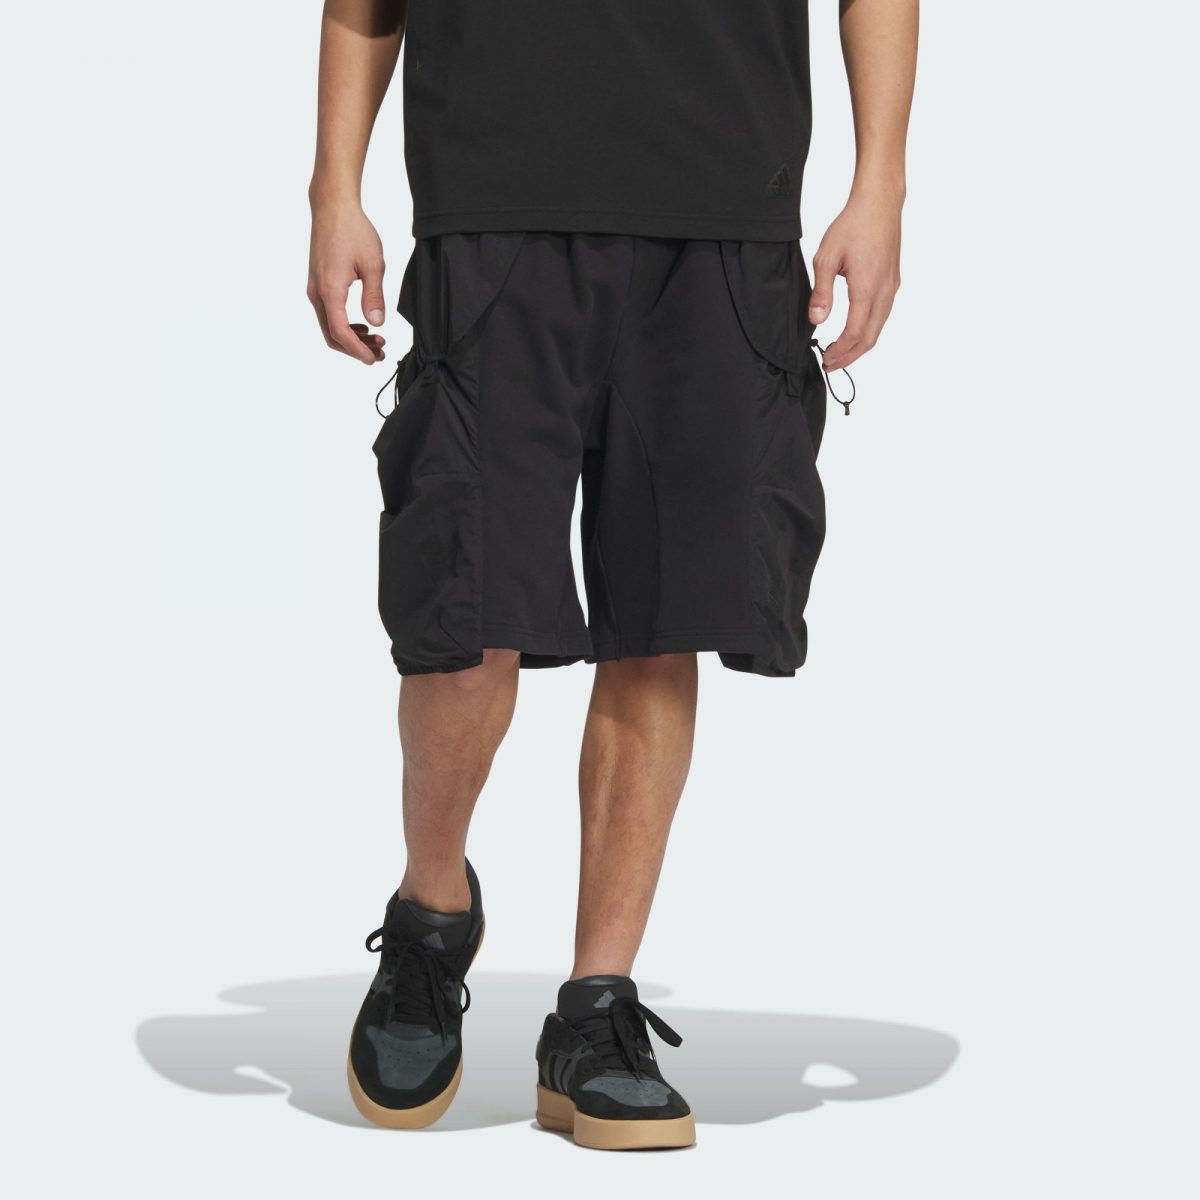 Мужские шорты adidas FUTURE STYLE WOVEN MIX SHORTS черные фото